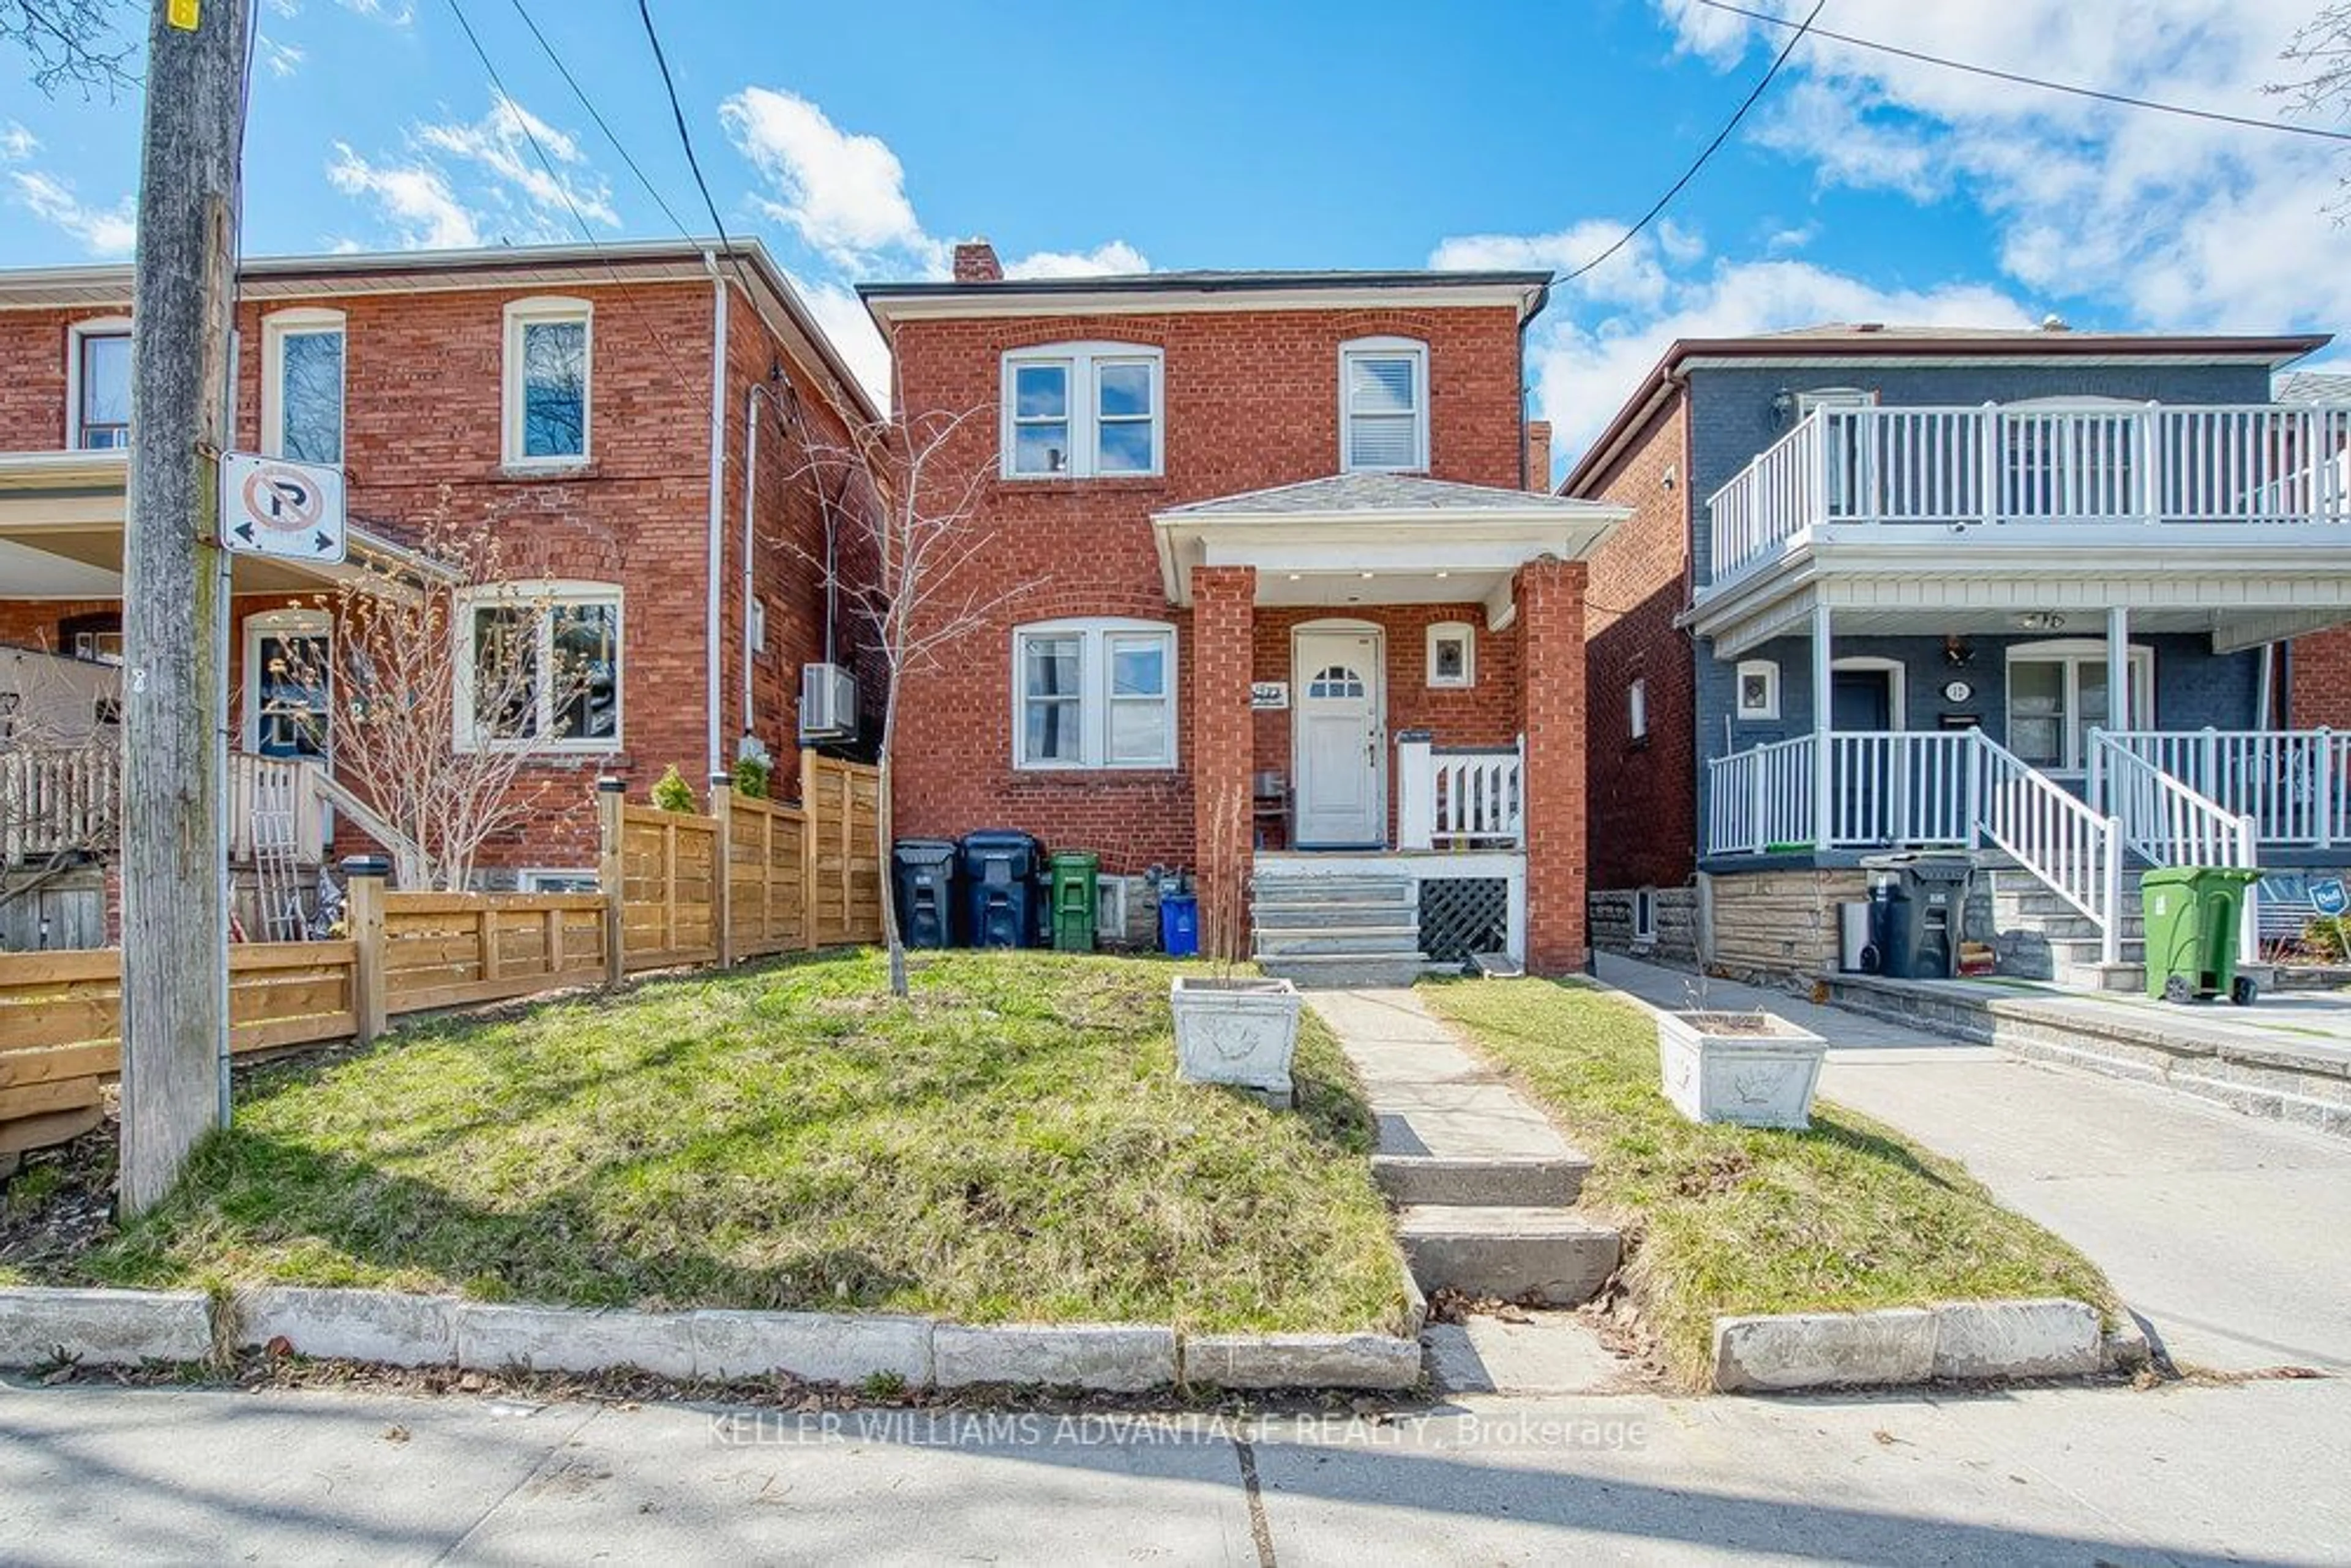 Home with brick exterior material for 10 Alameda Ave, Toronto Ontario M6C 3W2